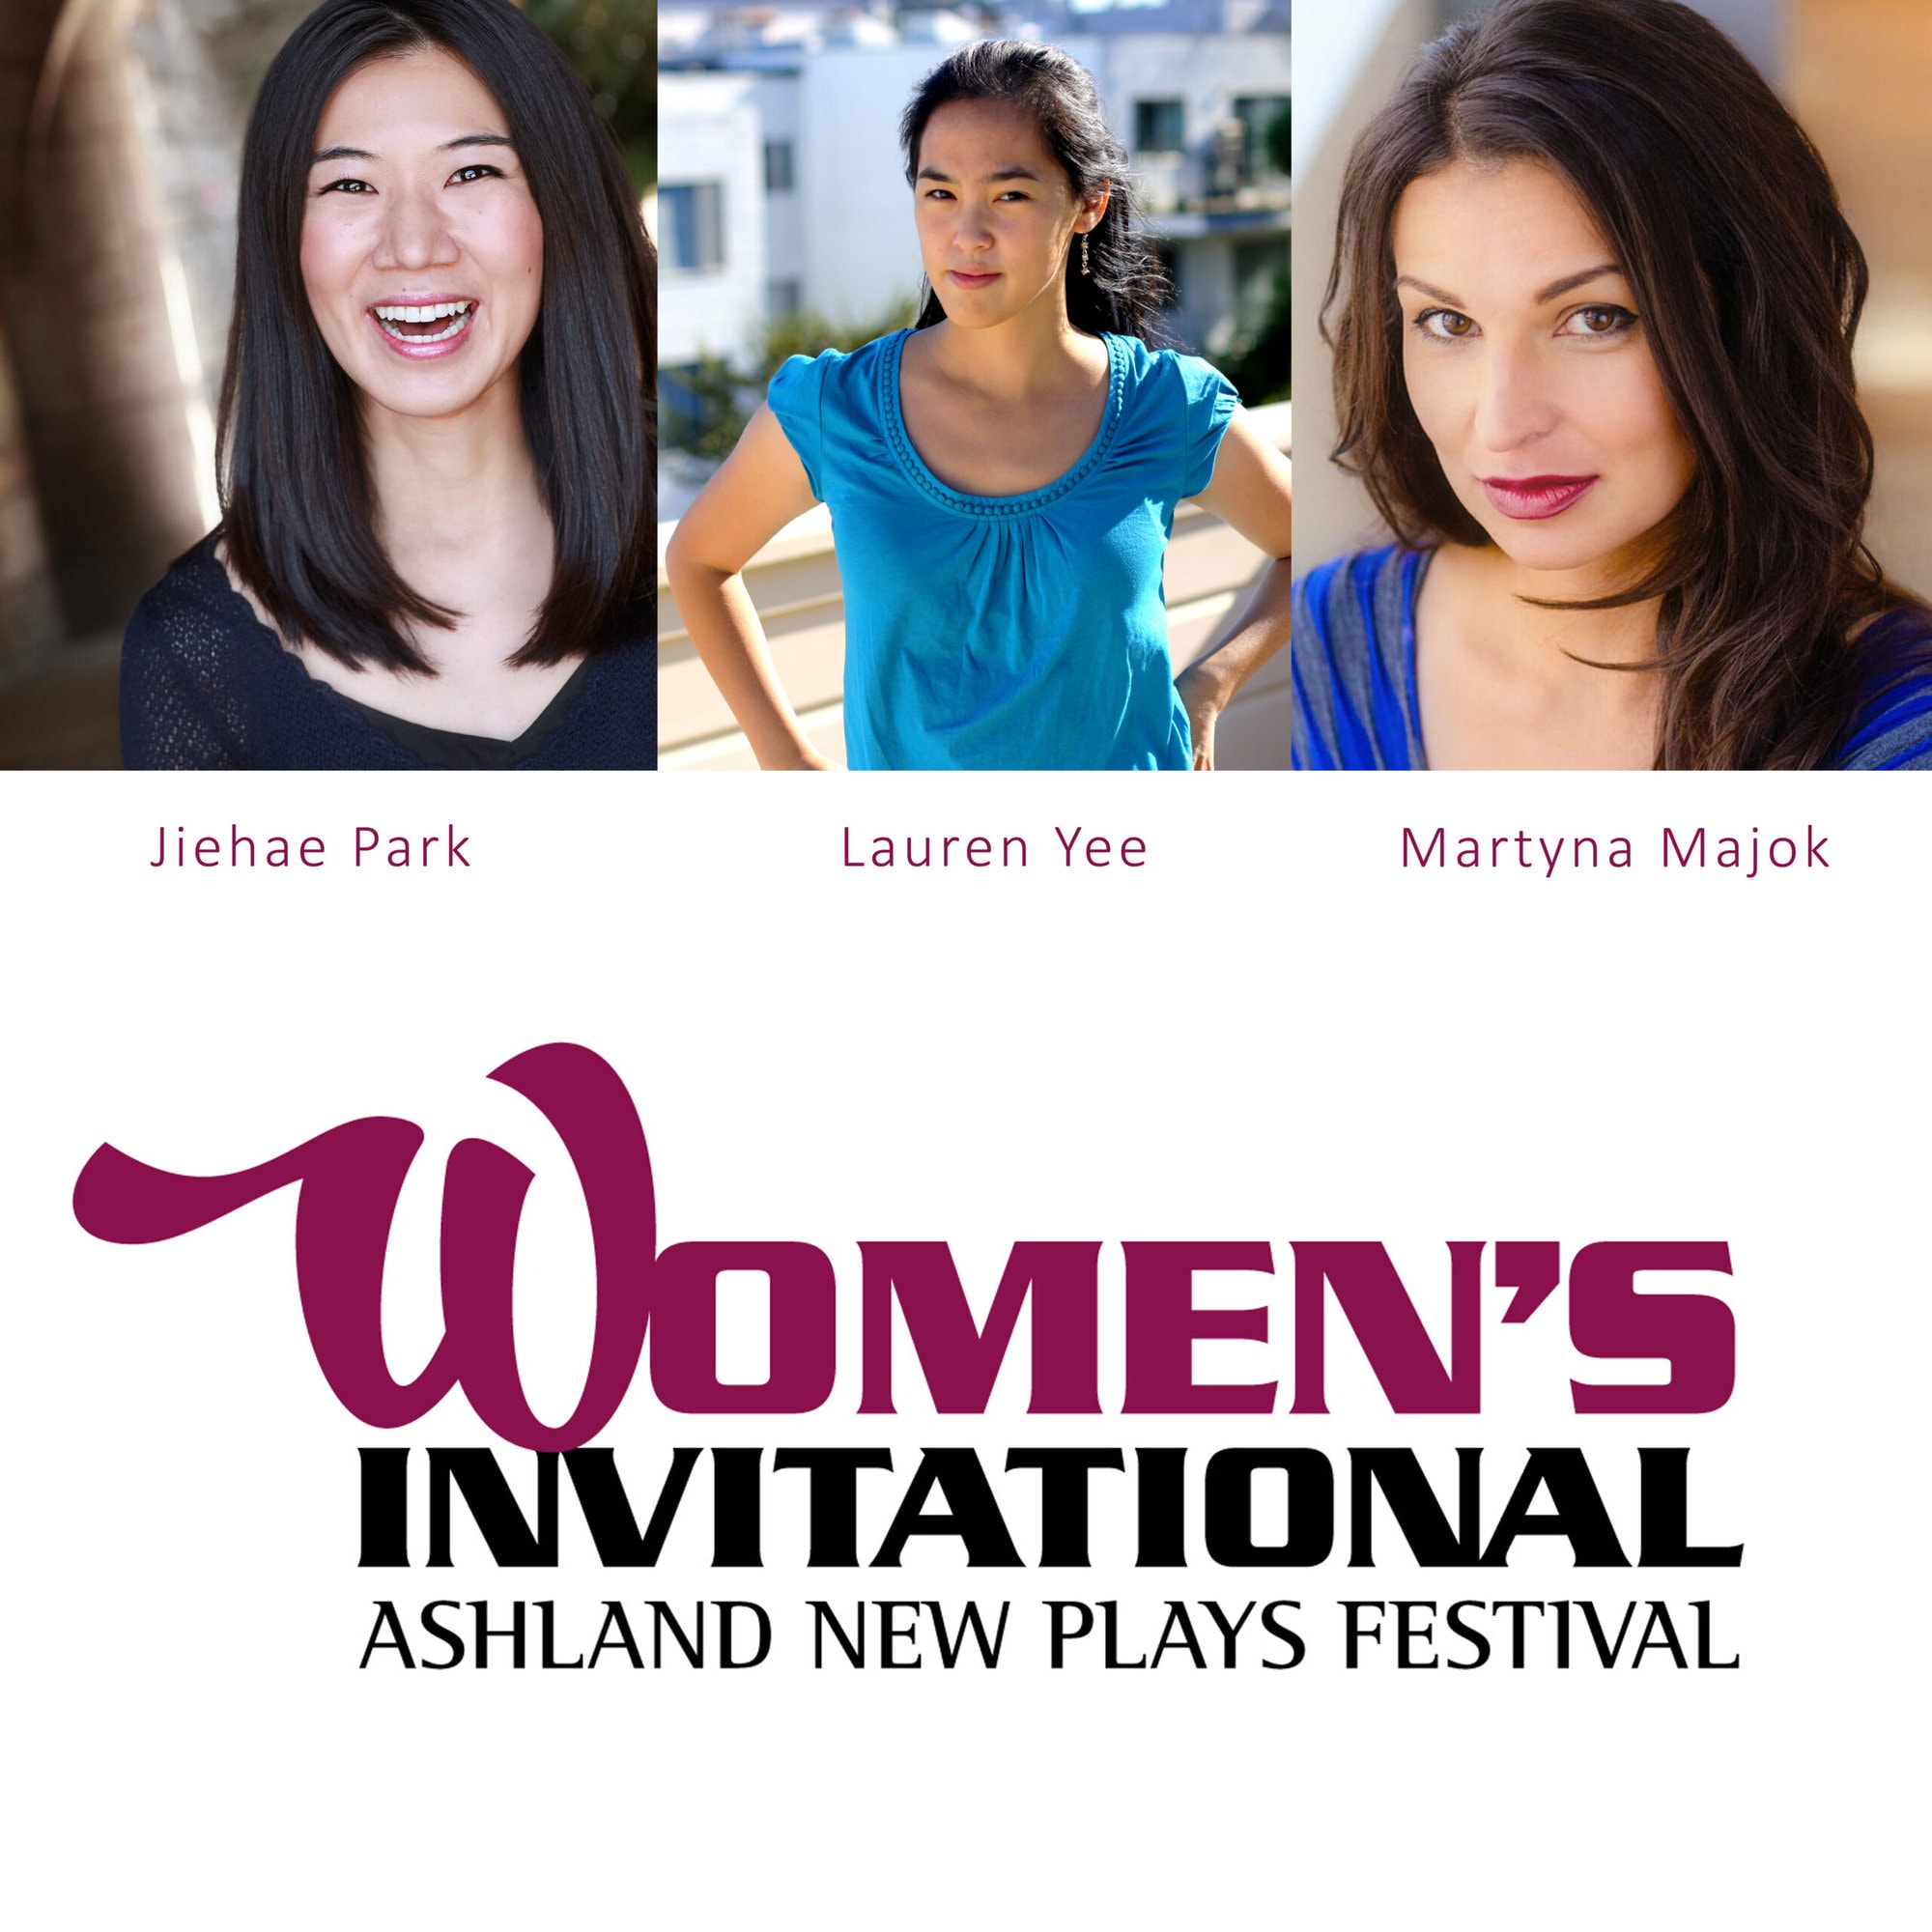 Women's Invitationals Ashland New Plays Festival 2016 Jiehae Park Lauren Yee Martyna Majok